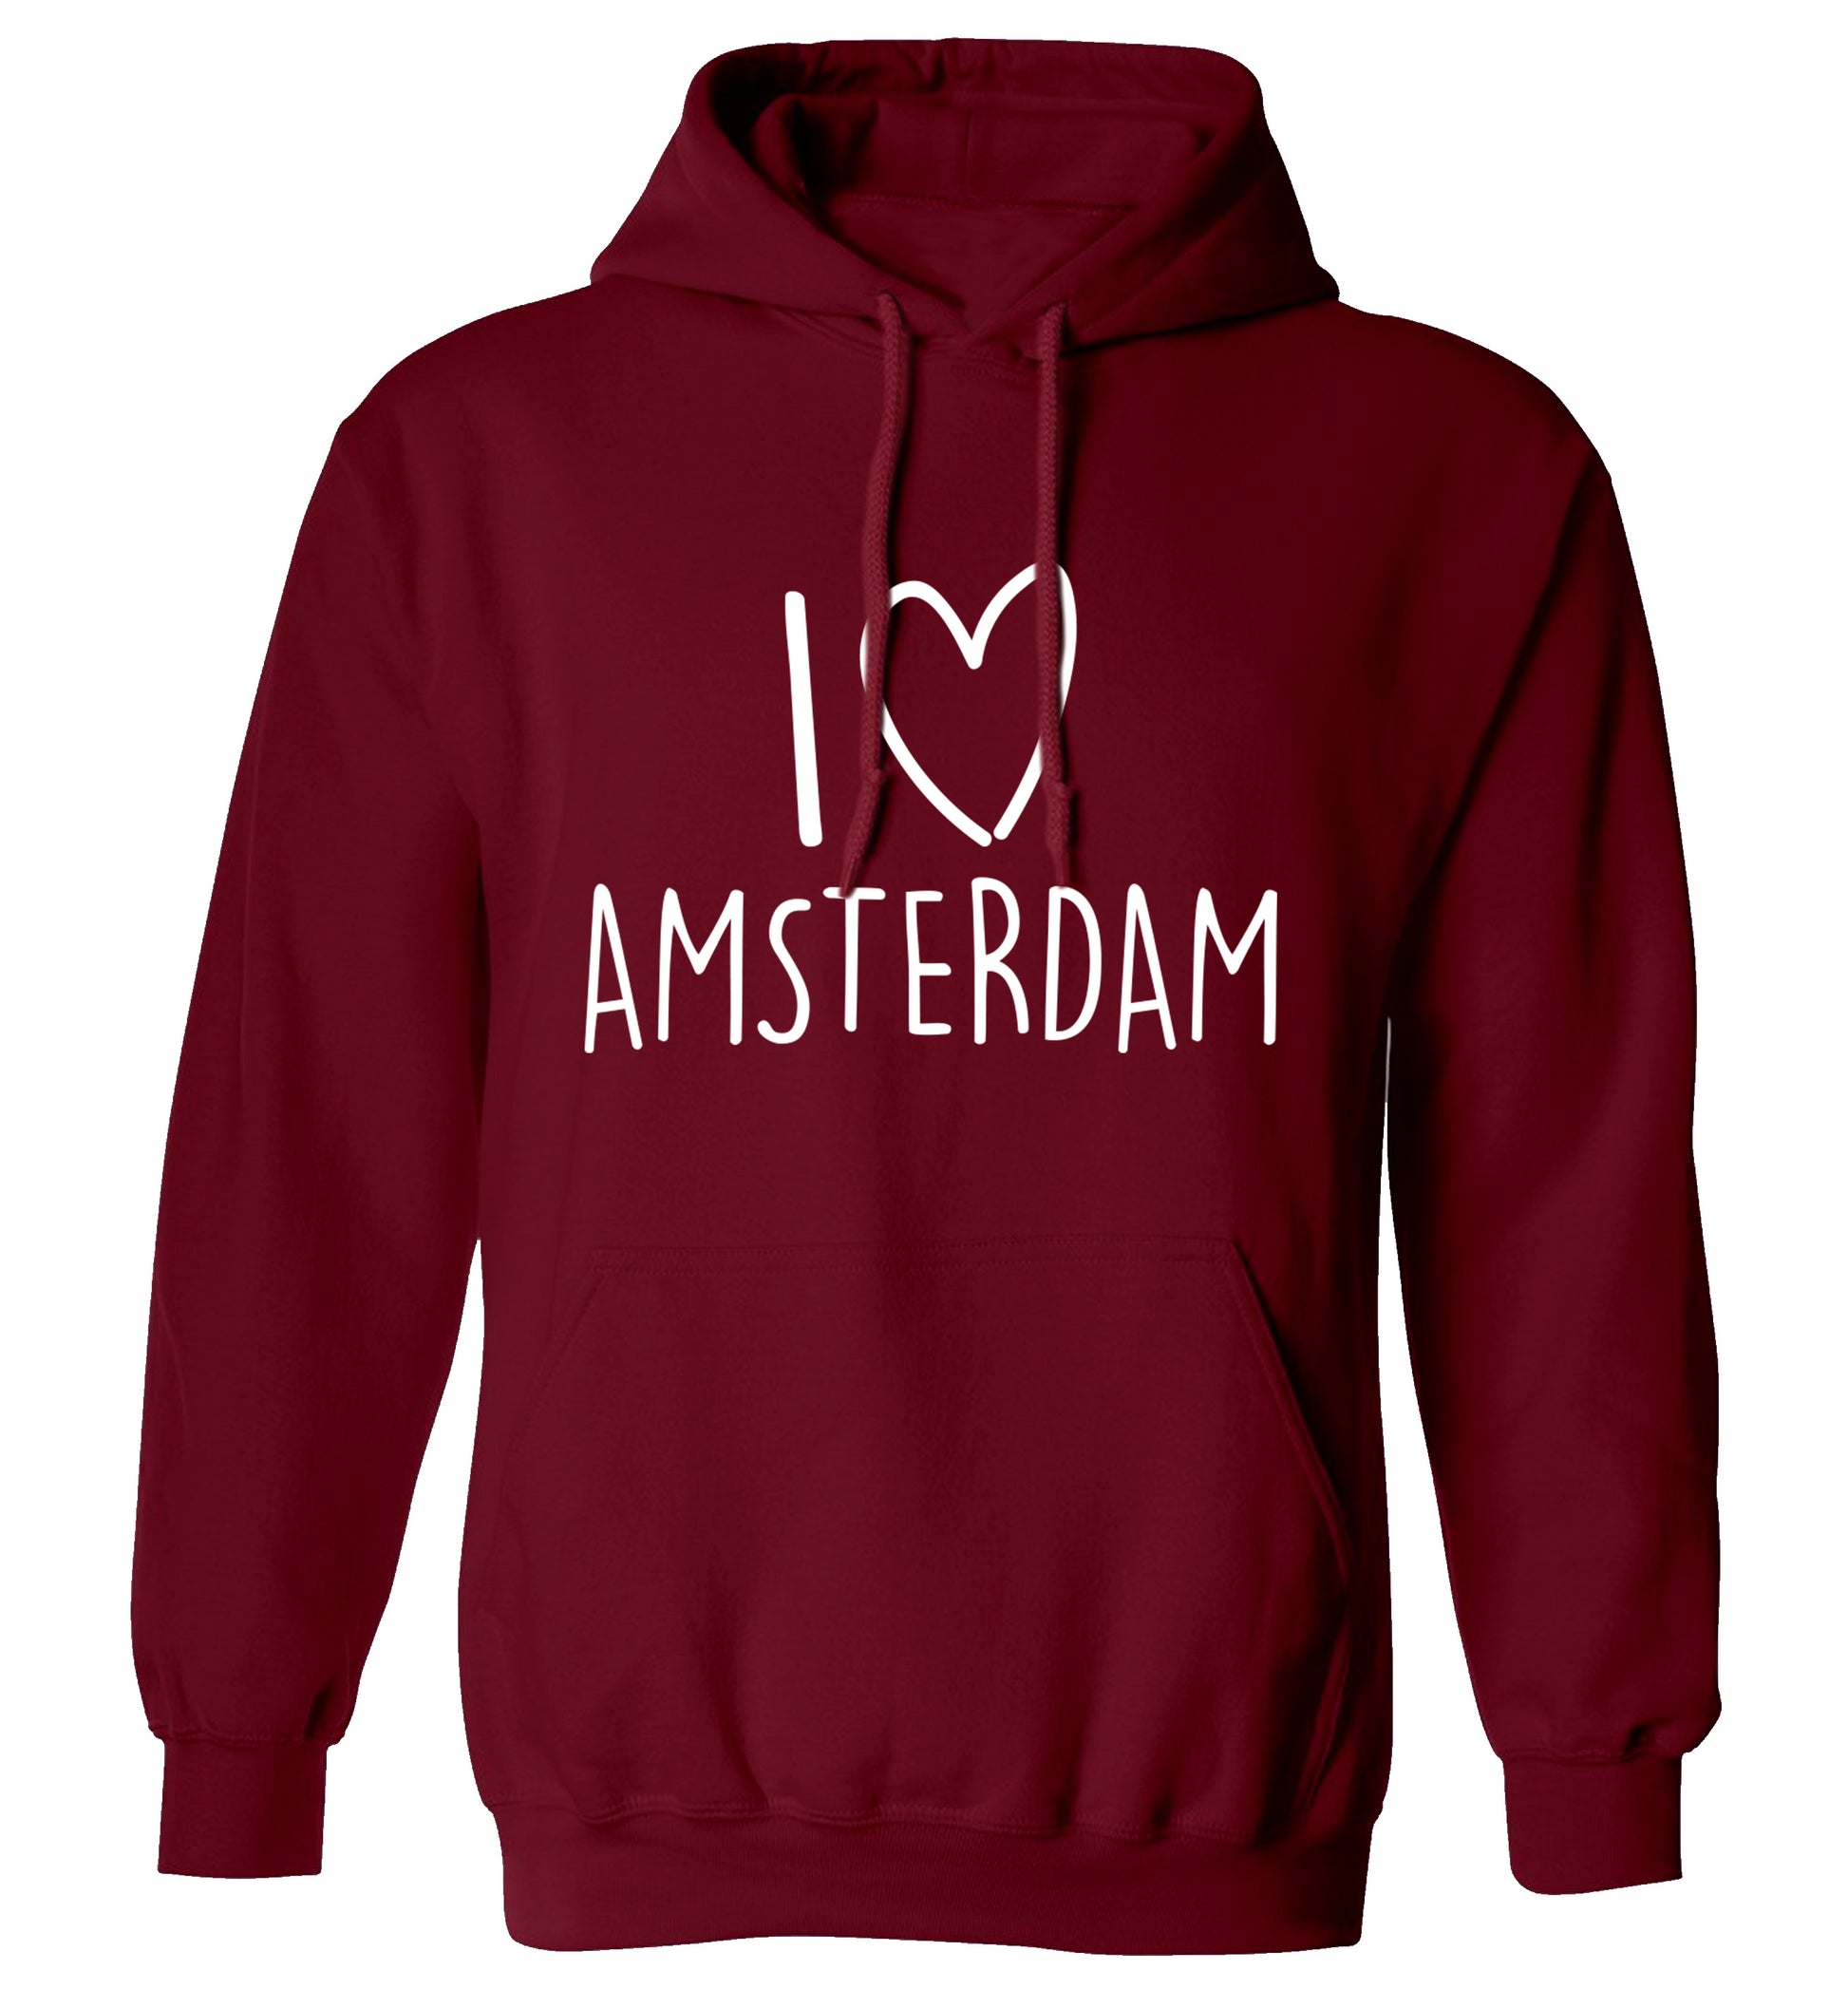 I love Amsterdam adults unisex maroon hoodie 2XL